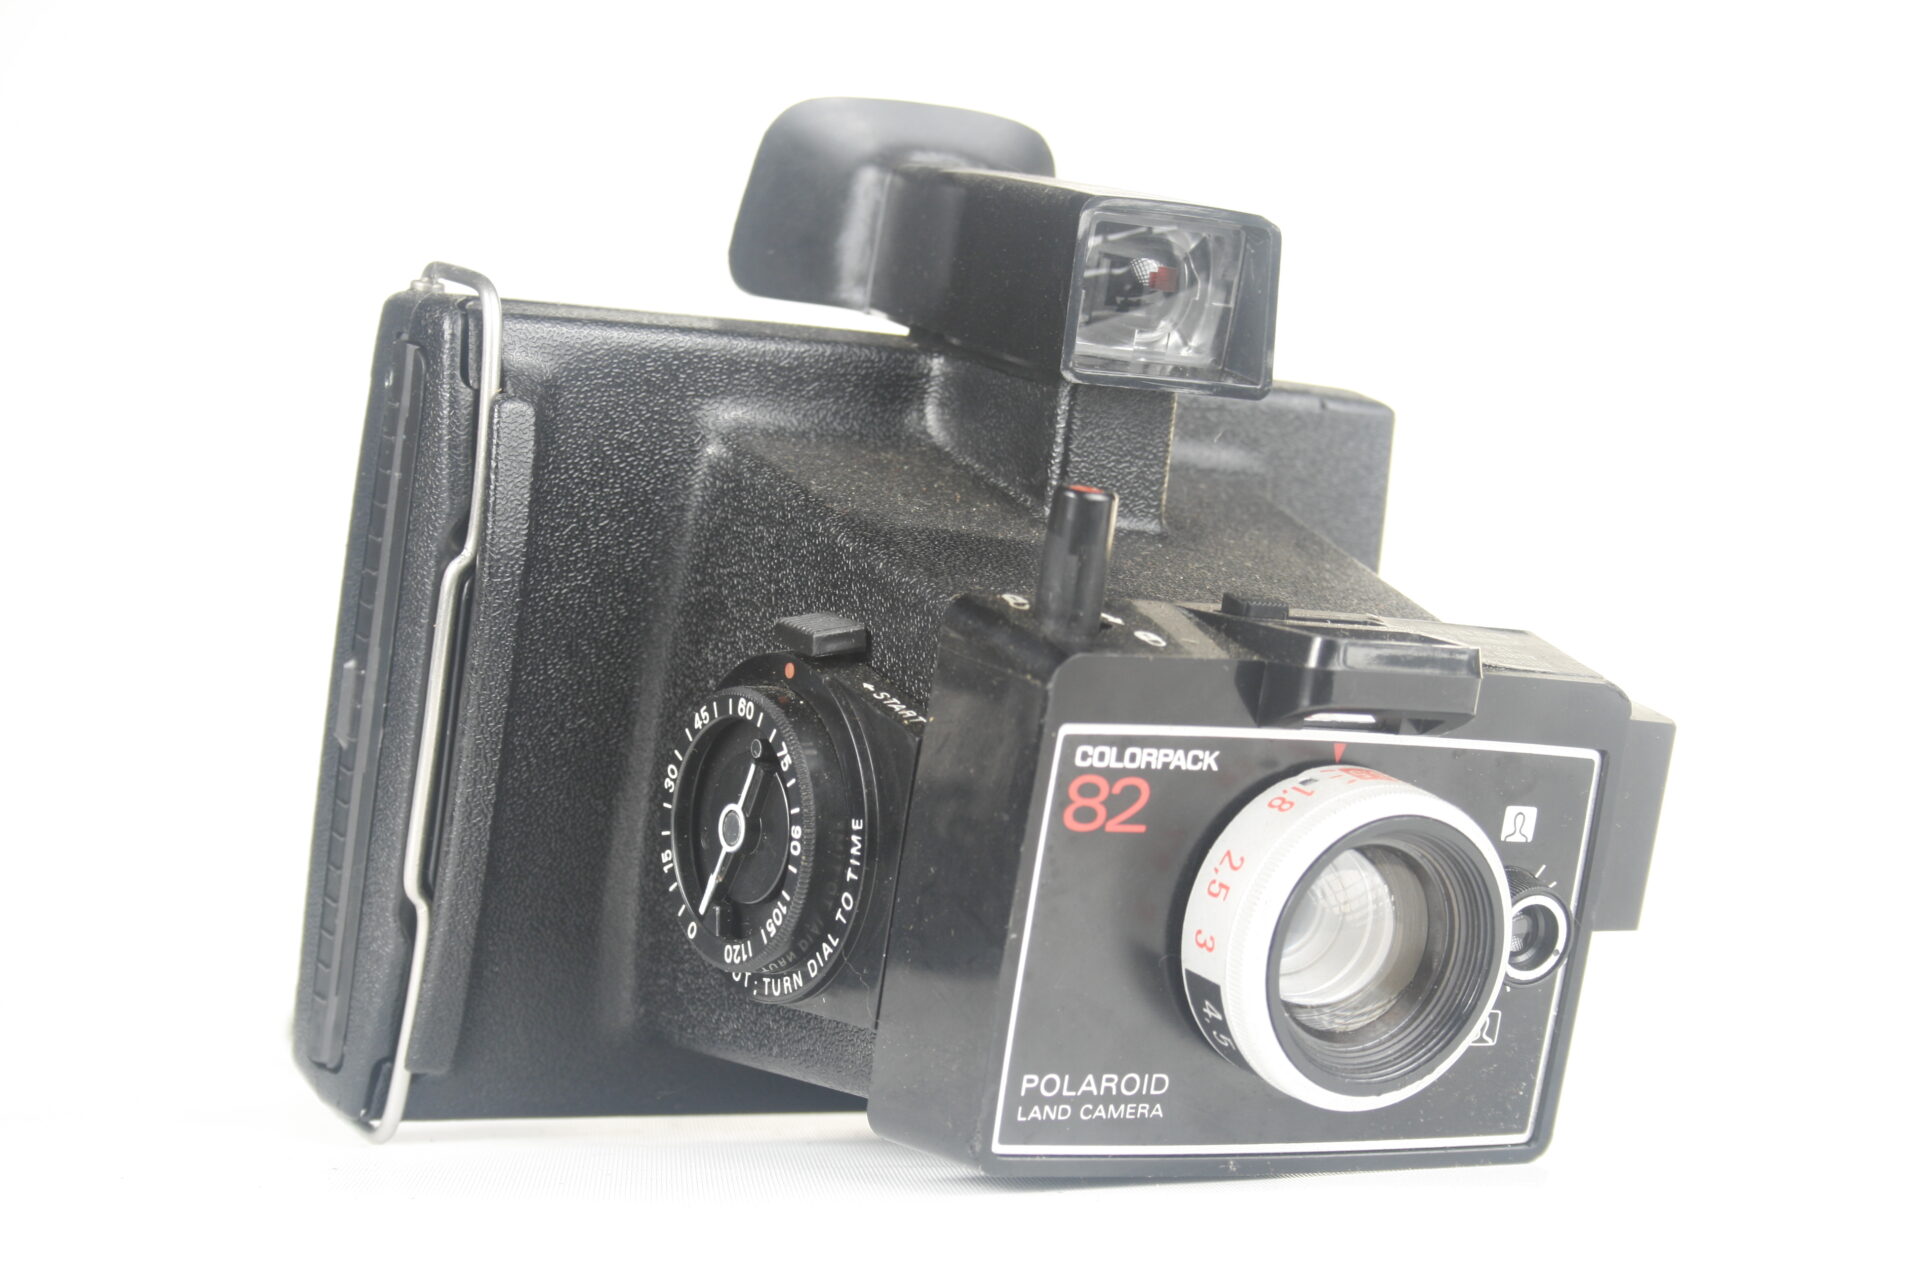 Polaroid Colorpack 82 landcamera. Peel apart 80 Series Land Packfilm. 1971-1975. Engeland